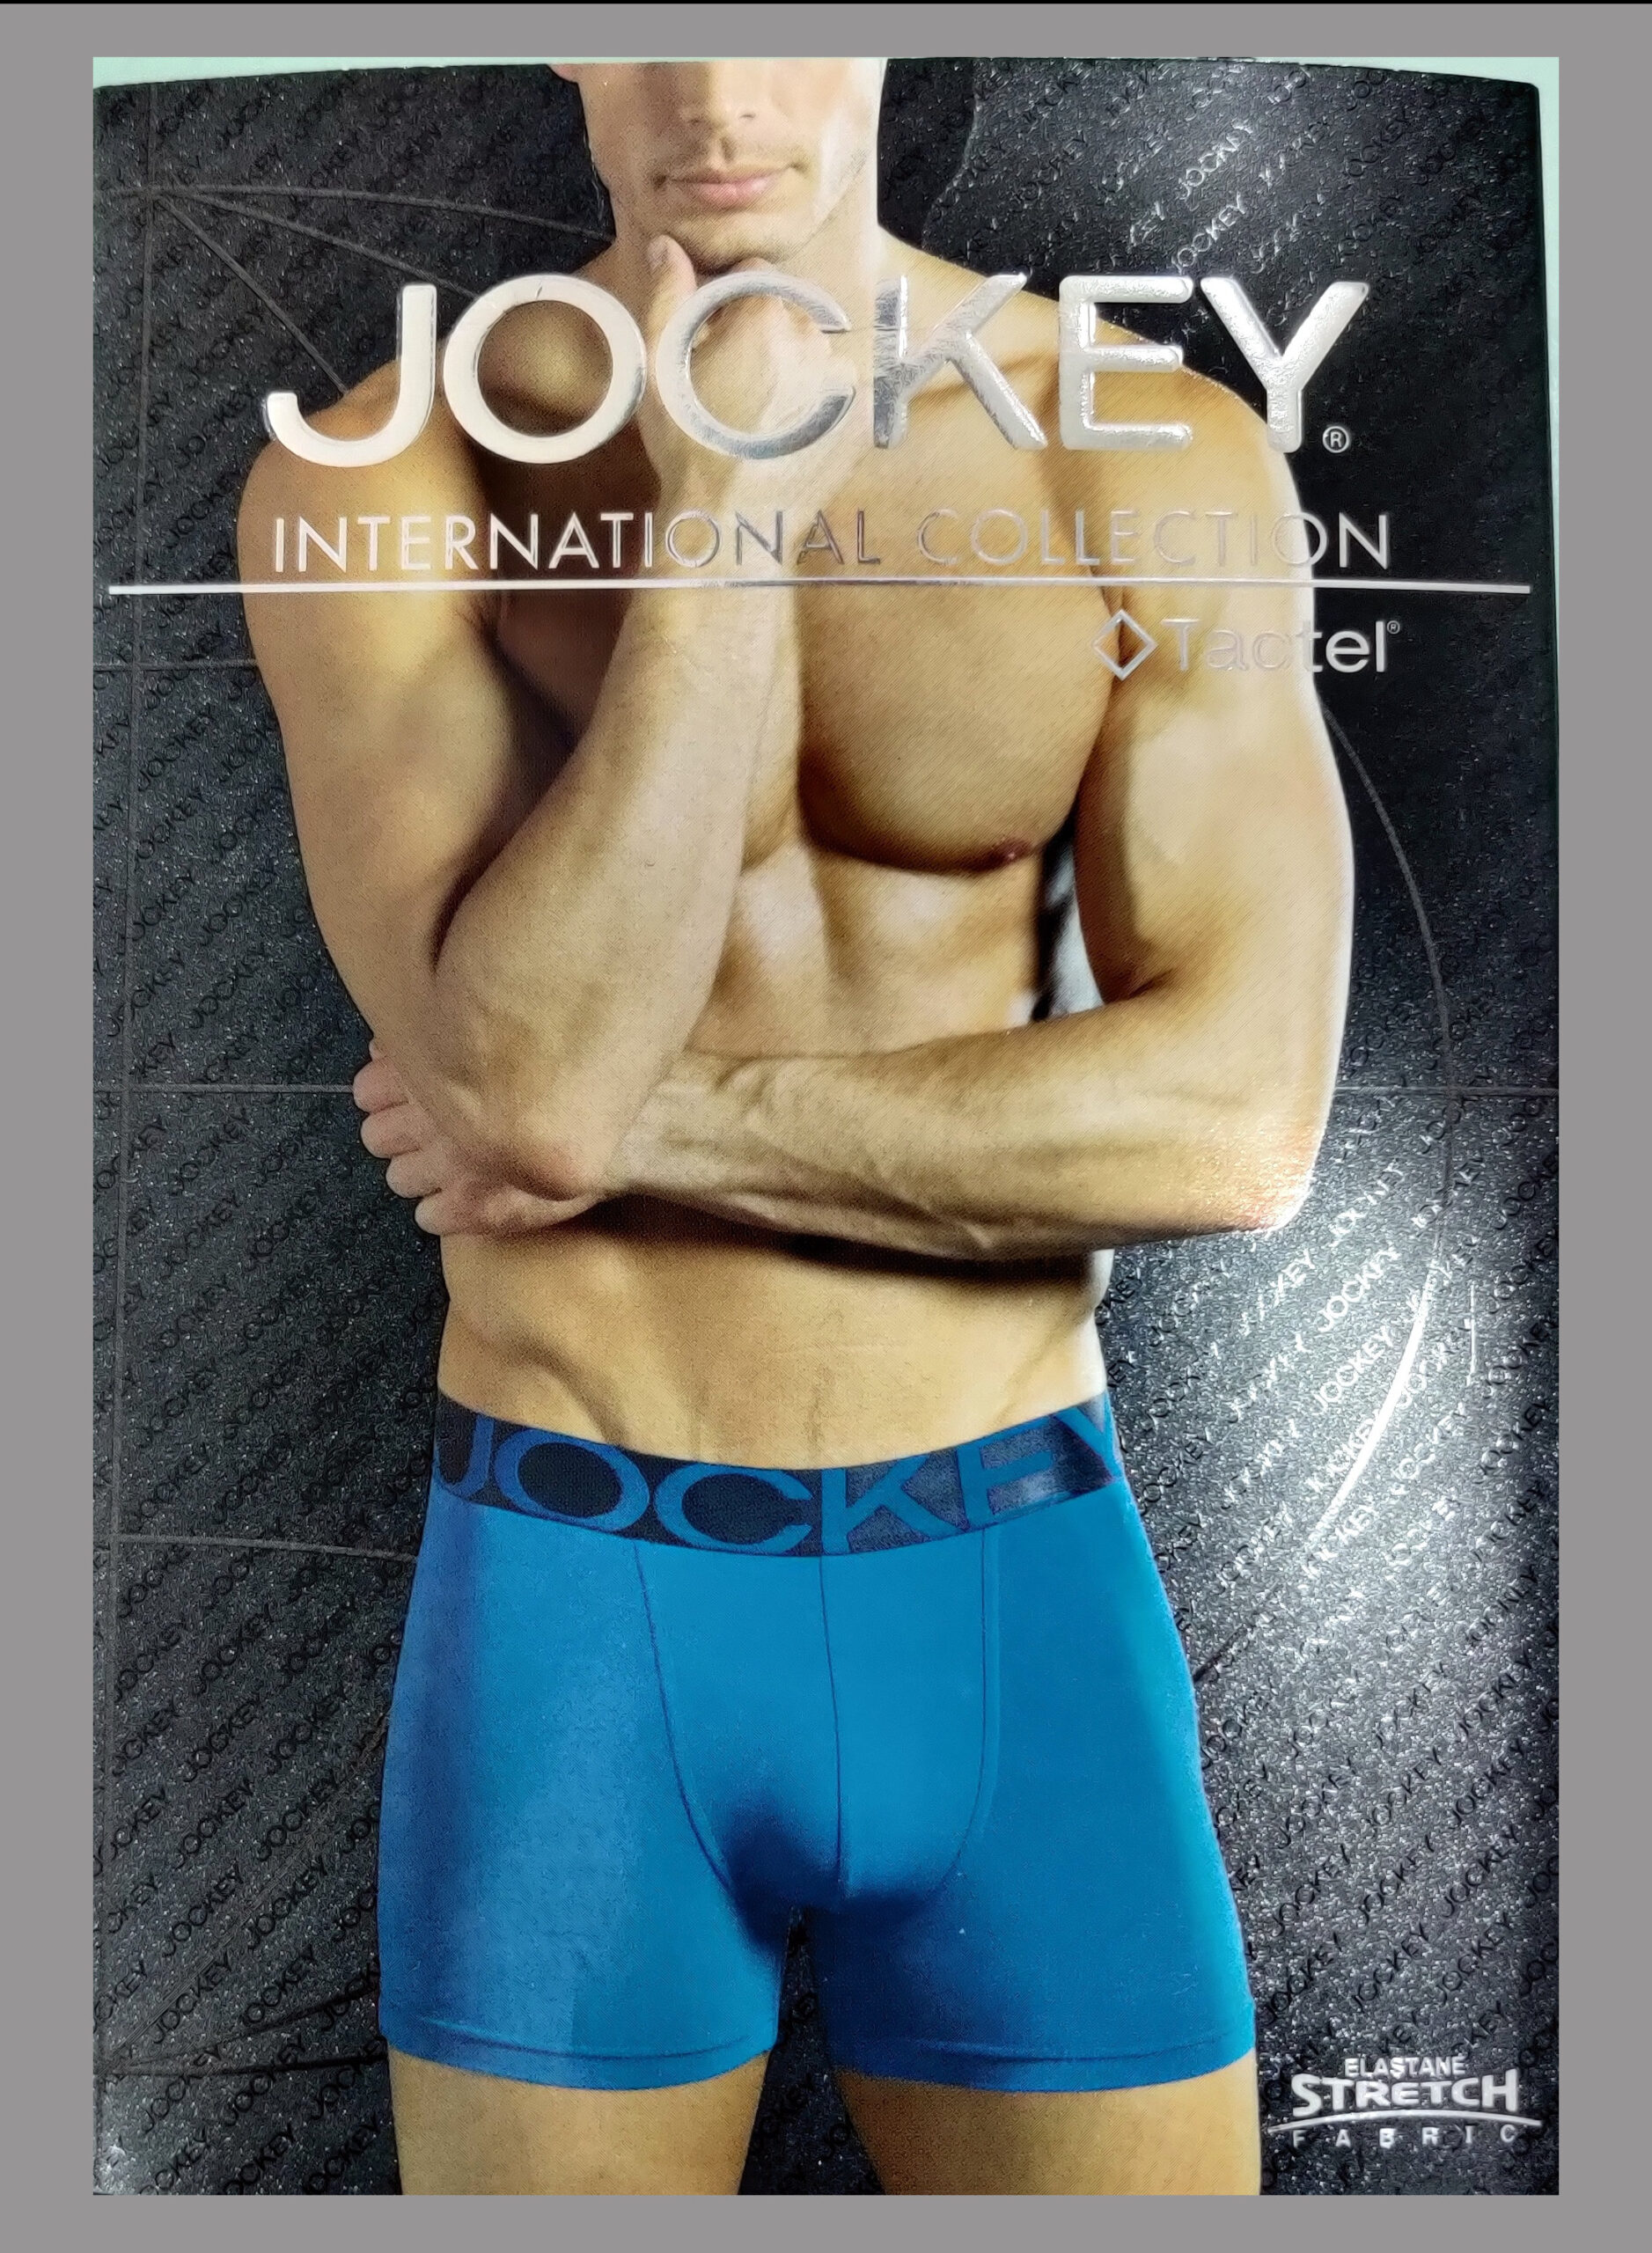 Jockey underwear sale – Lachic Innerwear and Cosmetics